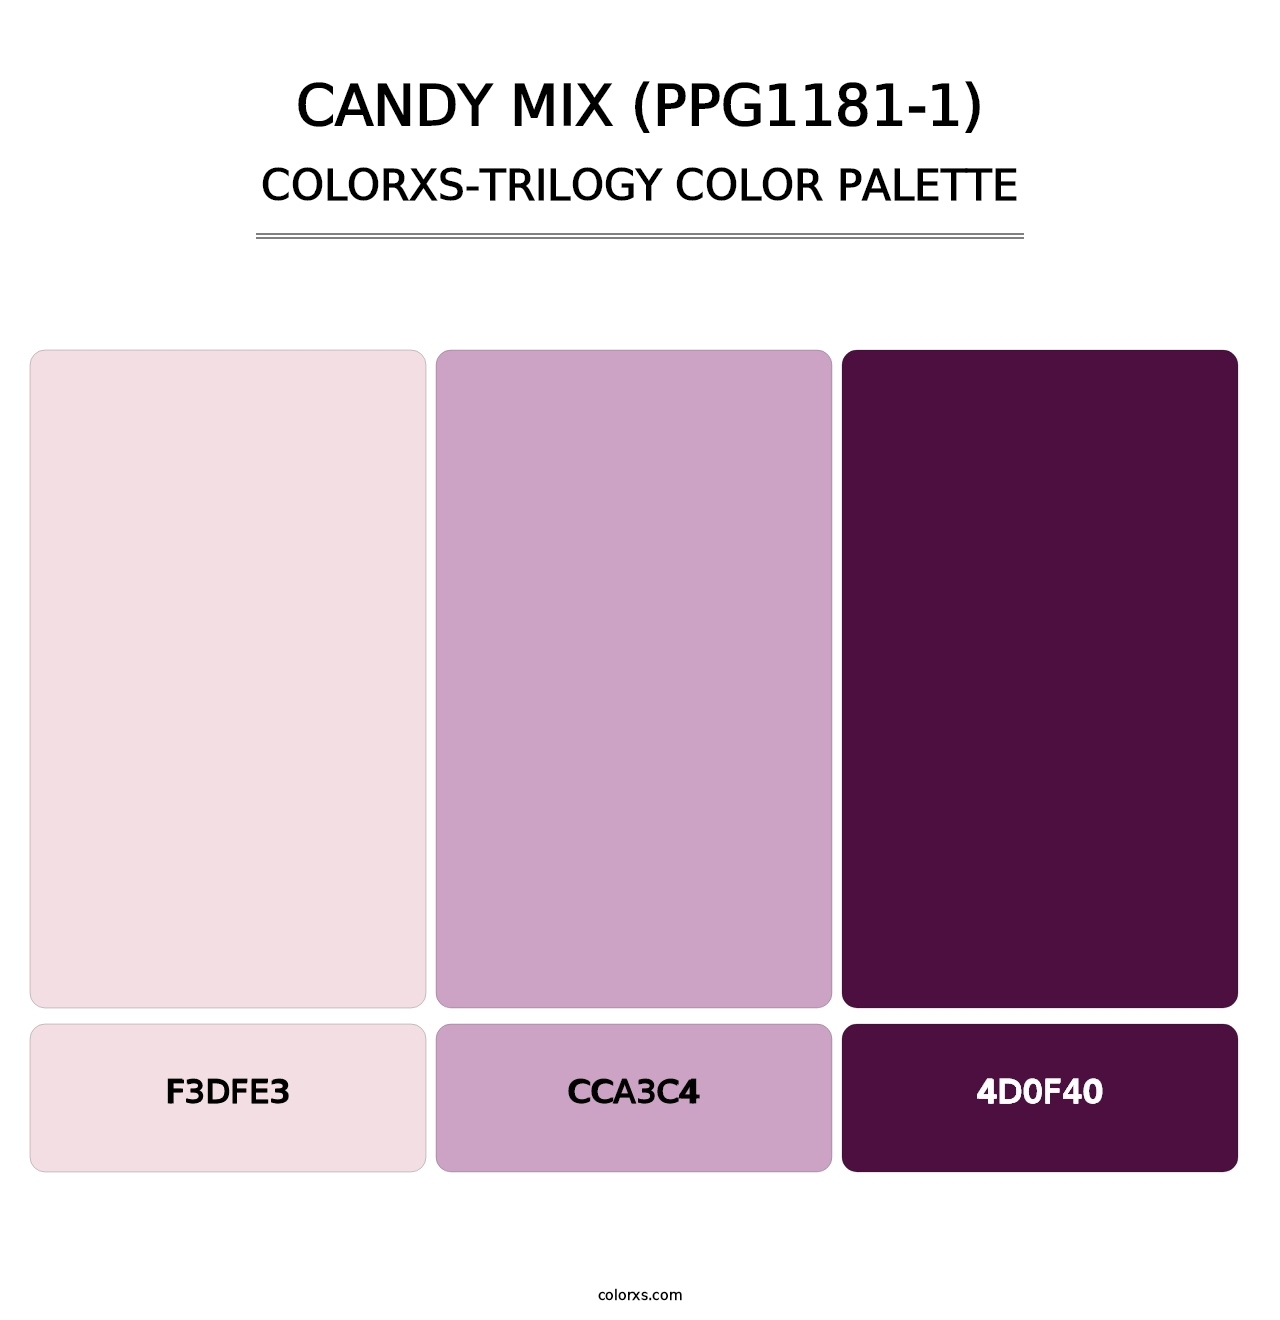 Candy Mix (PPG1181-1) - Colorxs Trilogy Palette